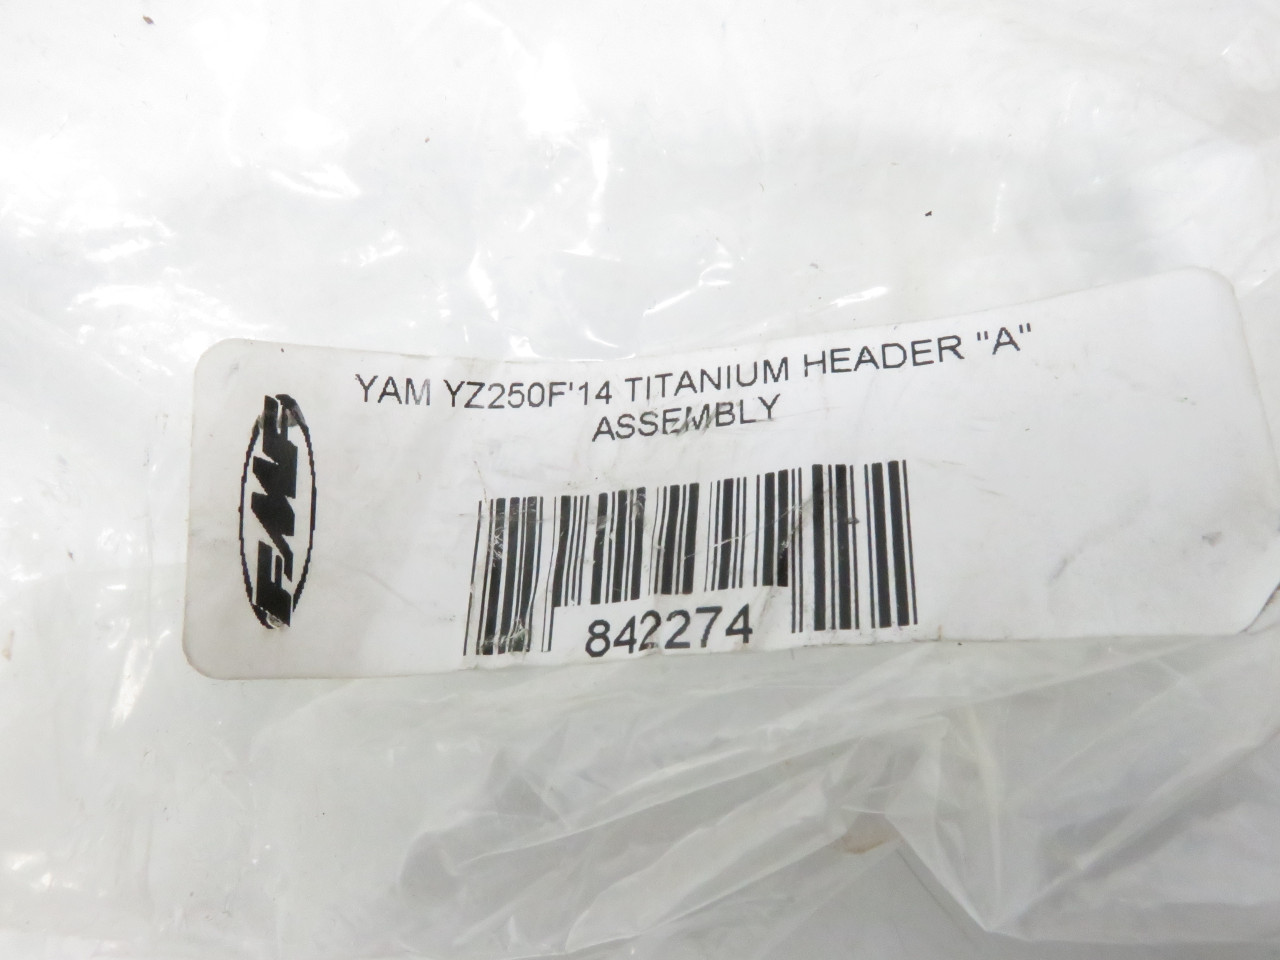 Yamaha YZ250F 2014 Titanium Header A Assembly 842274